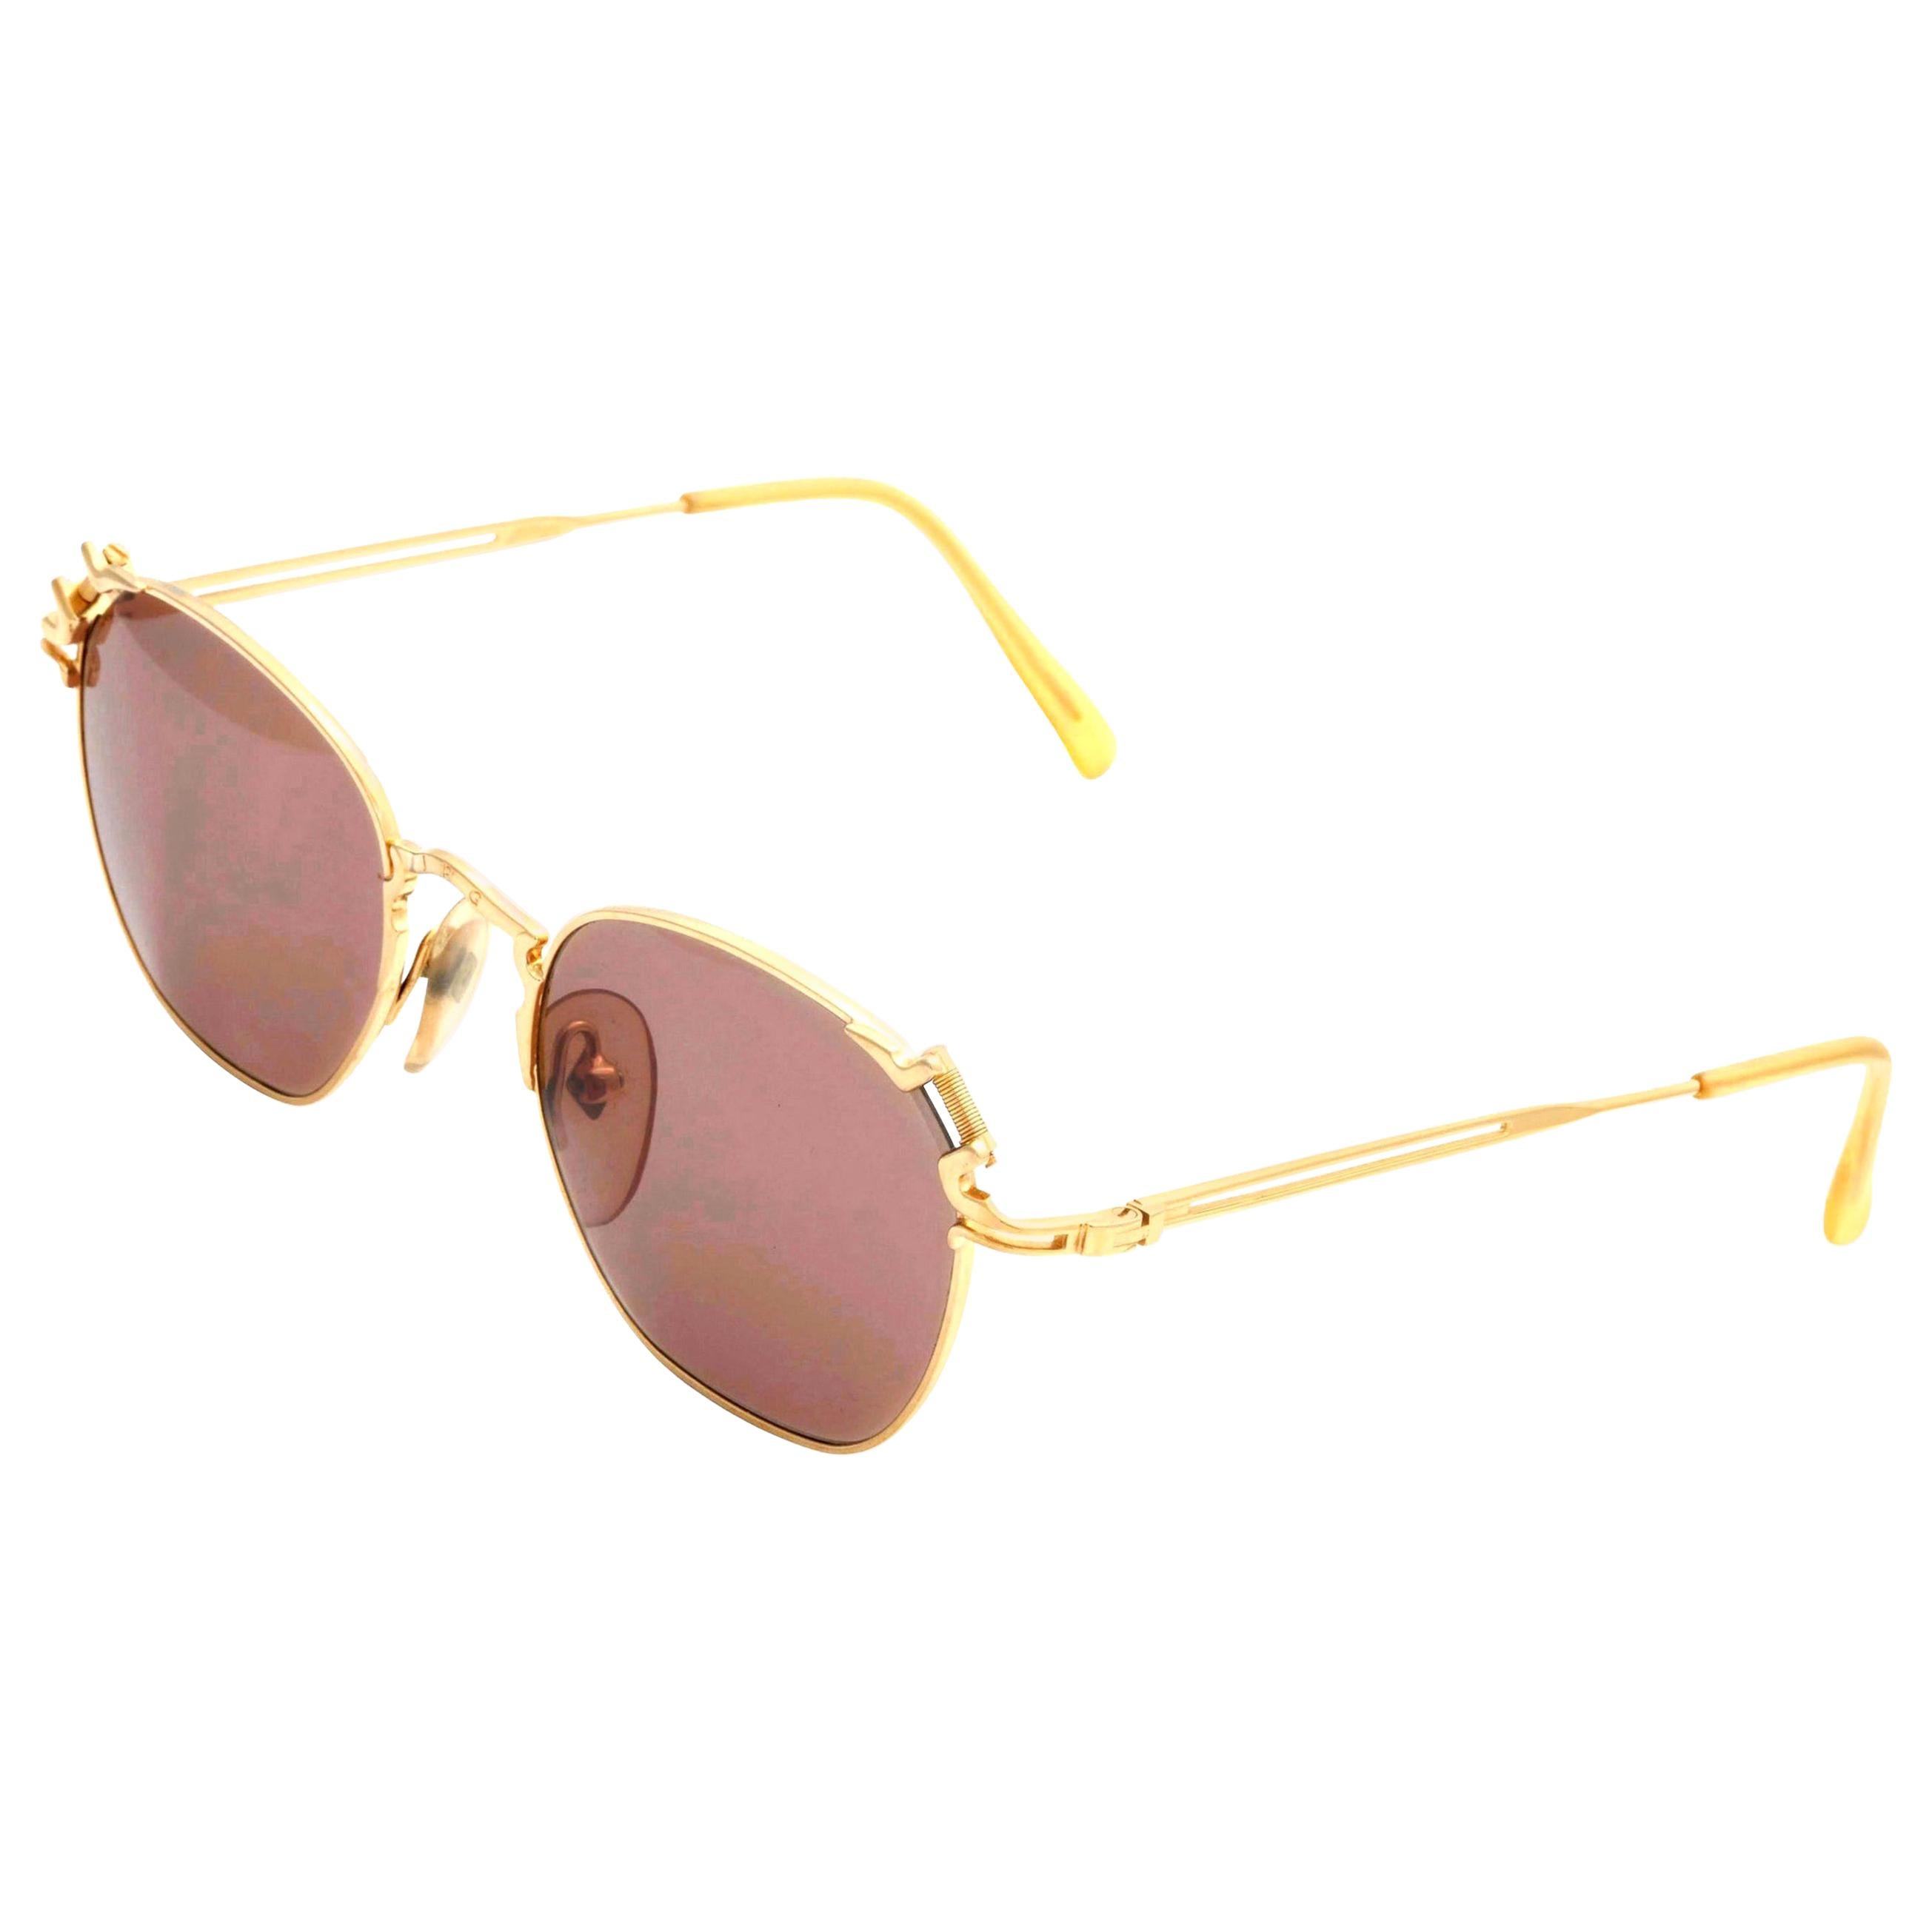 Jean Paul Gaultier Vintage Sunglasses 56-3171 For Sale